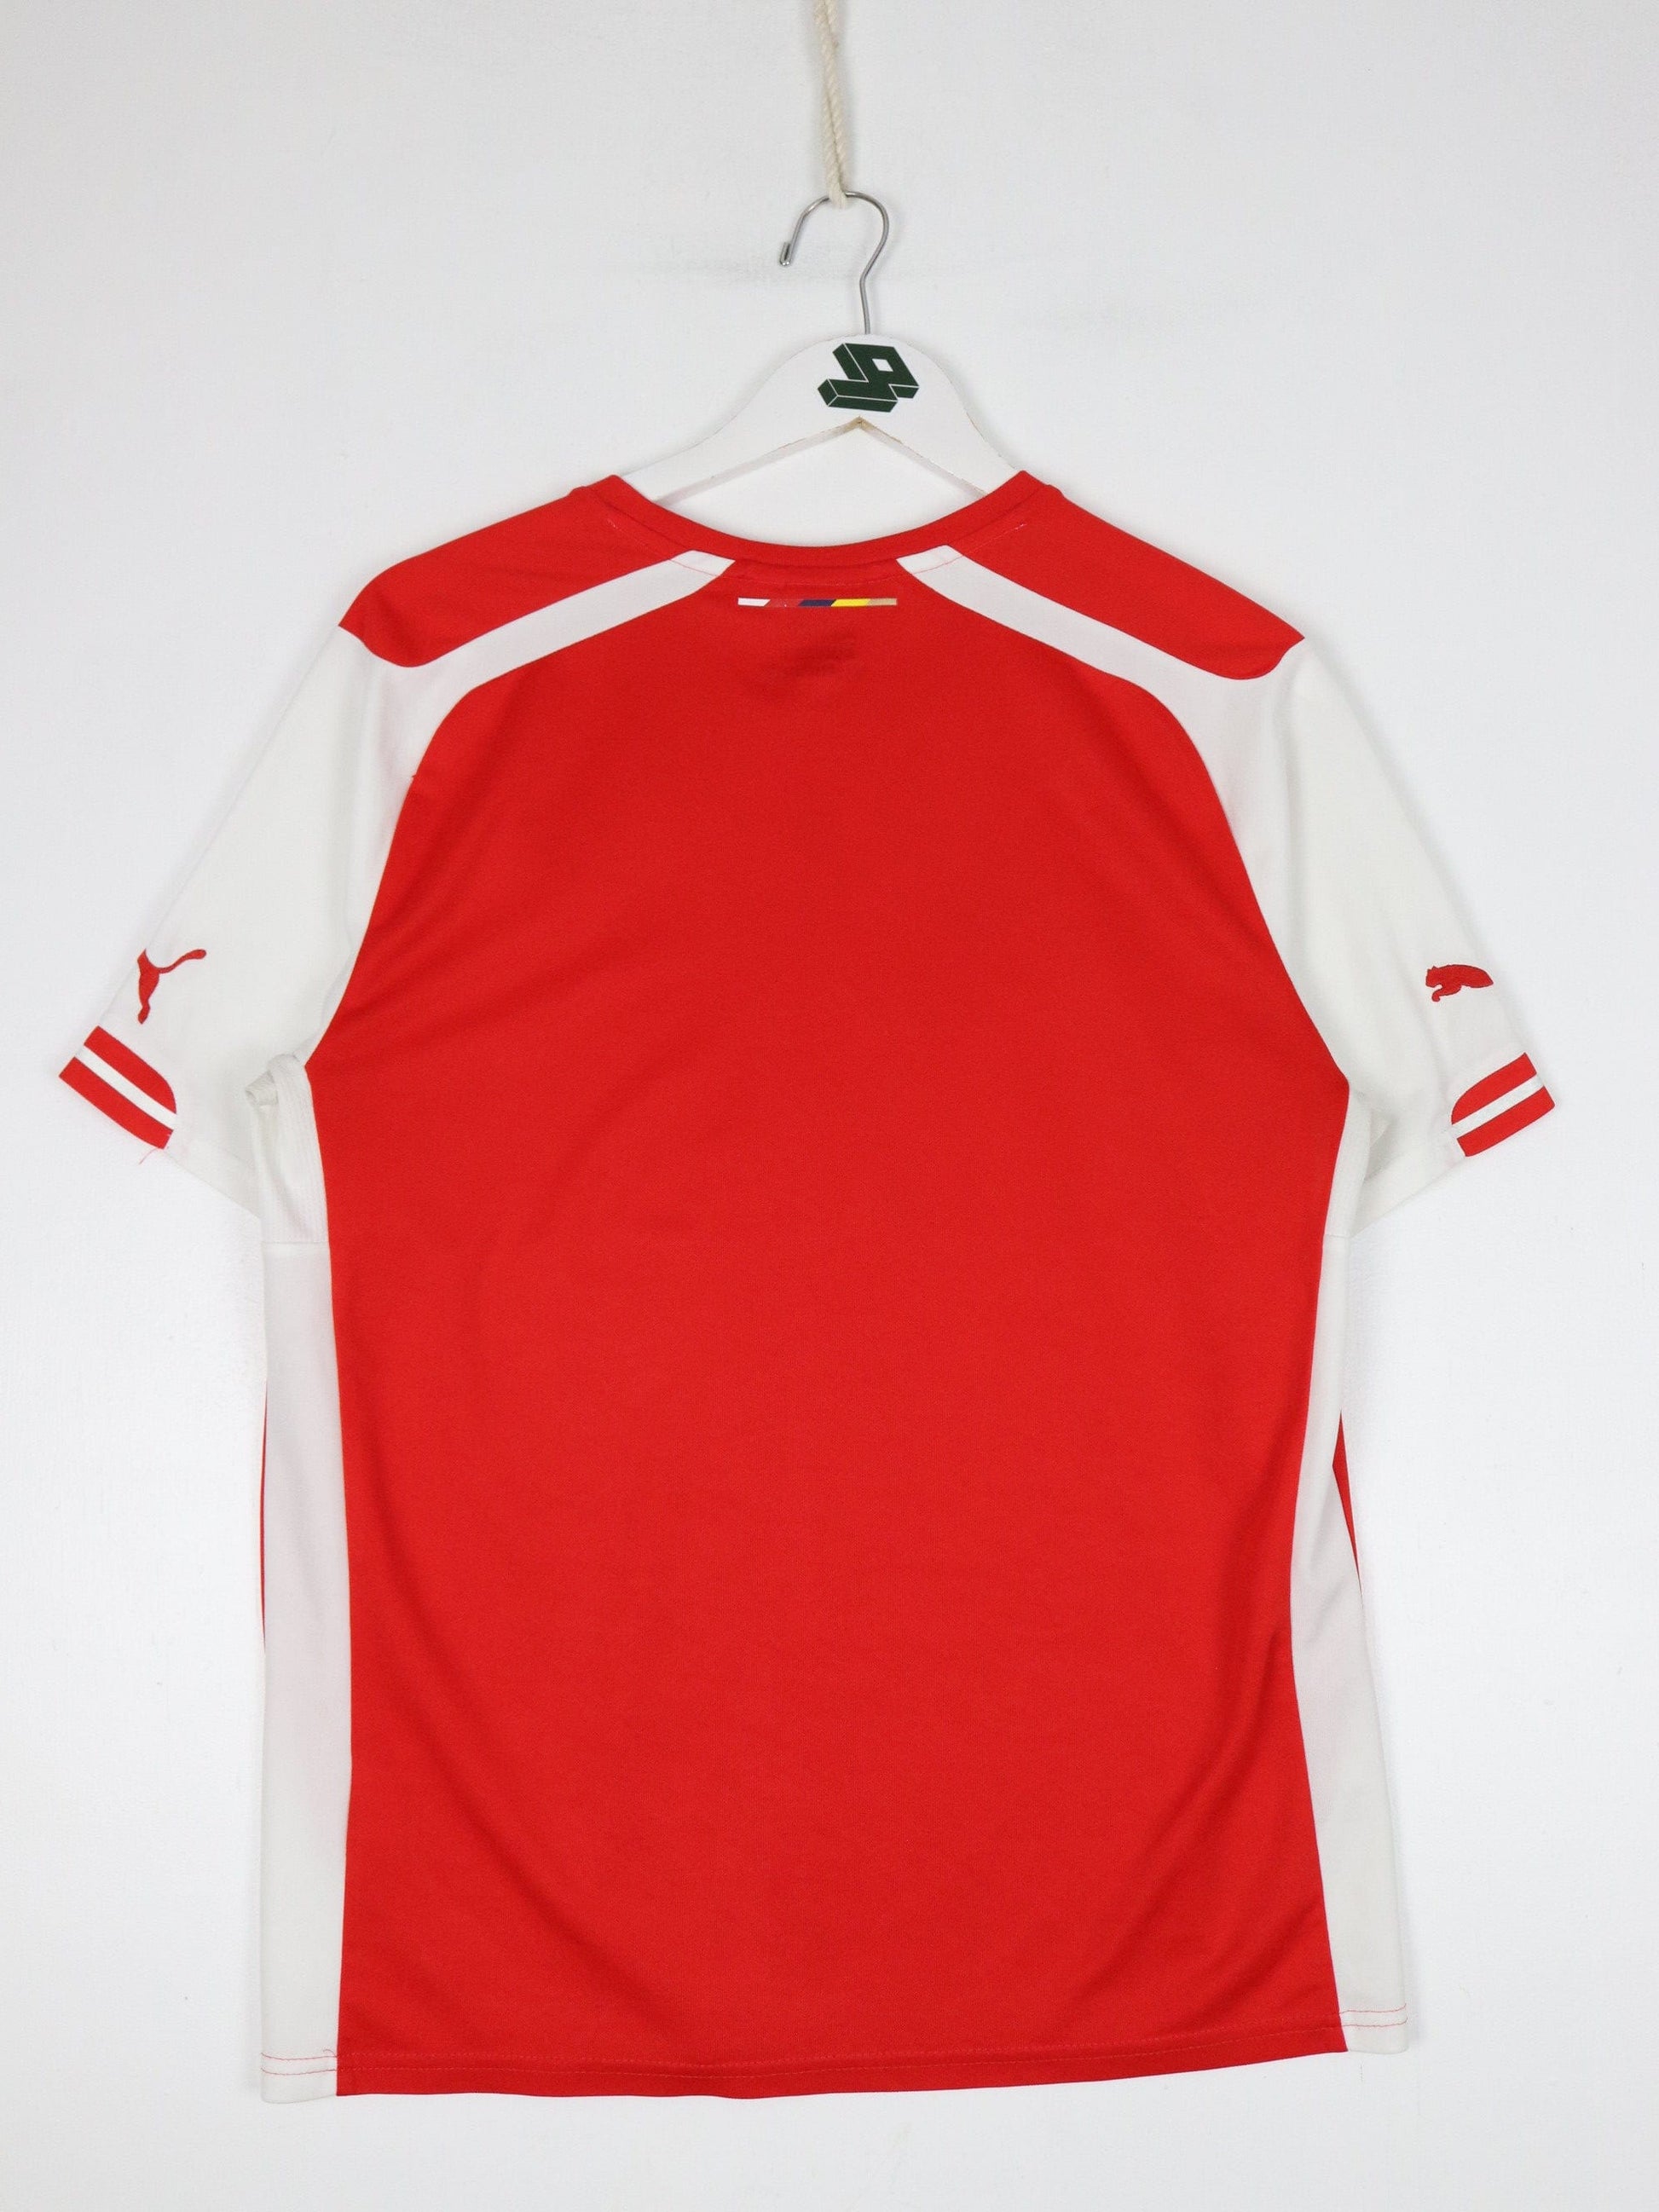 Puma Jersey Arsenal Soccer Jersey Mens Medium Red Puma 2014/15 Kit